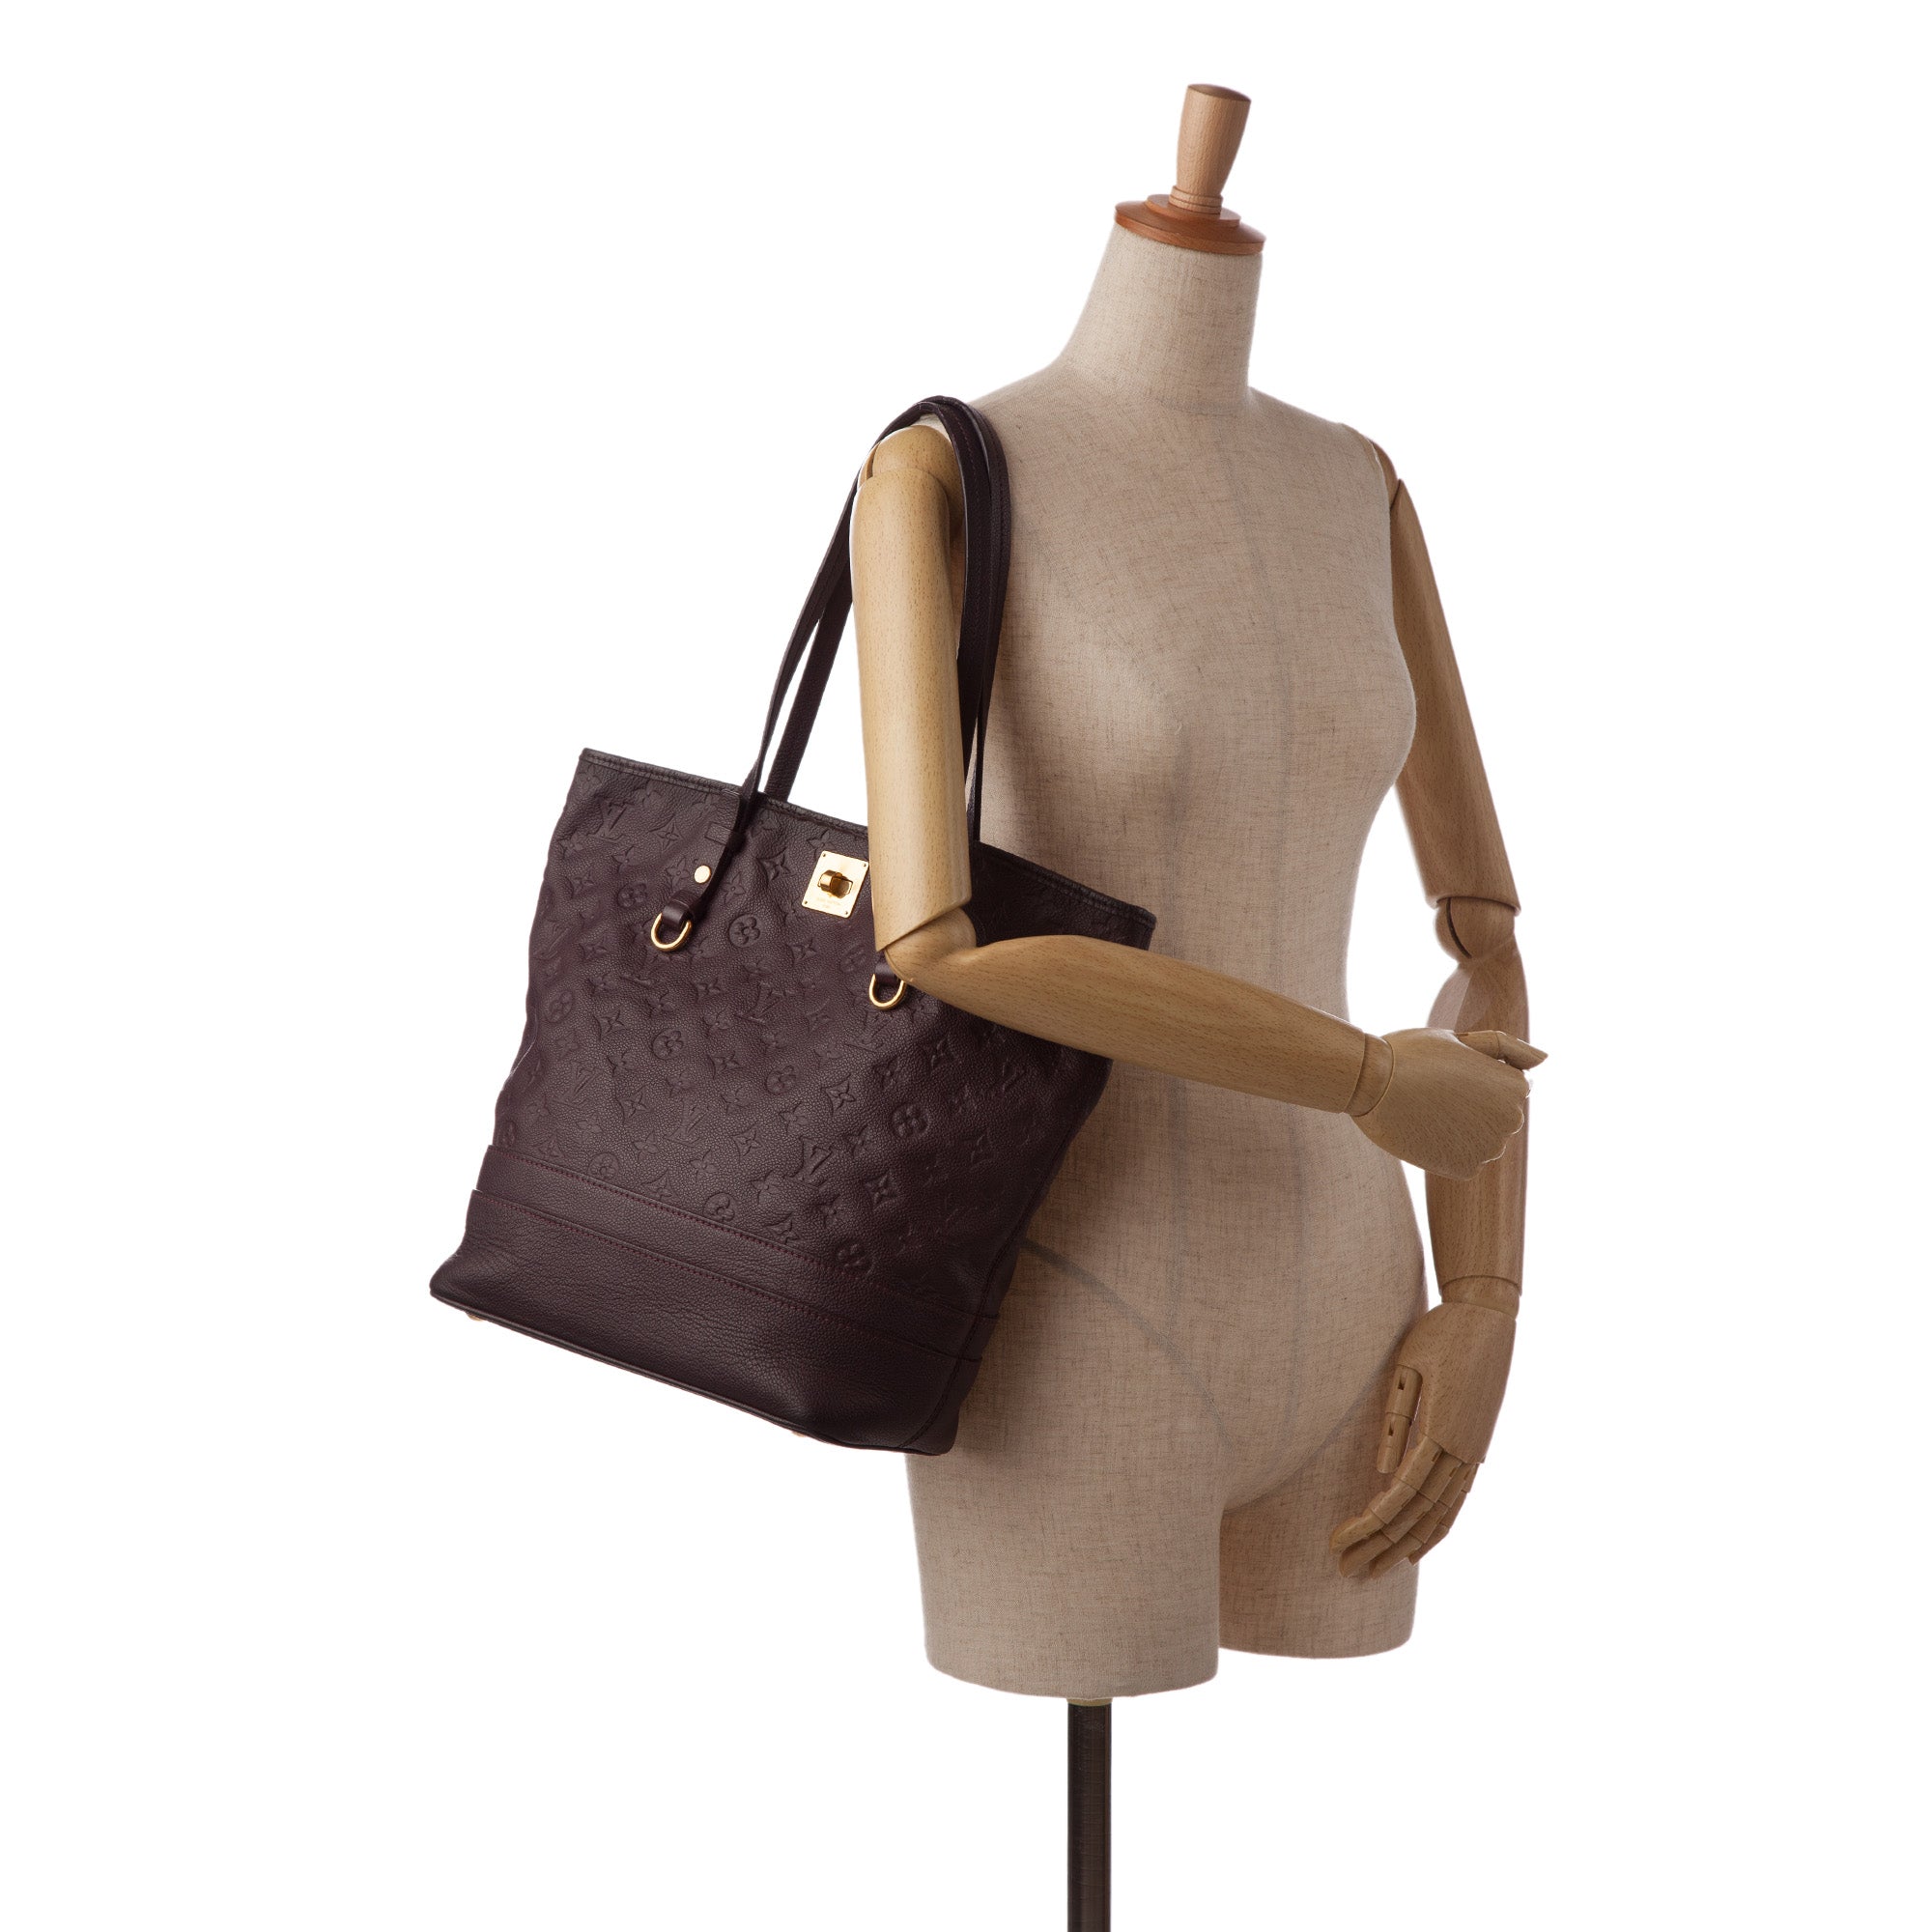 Louis Vuitton Citadine Tote Empreinte Leather Bag